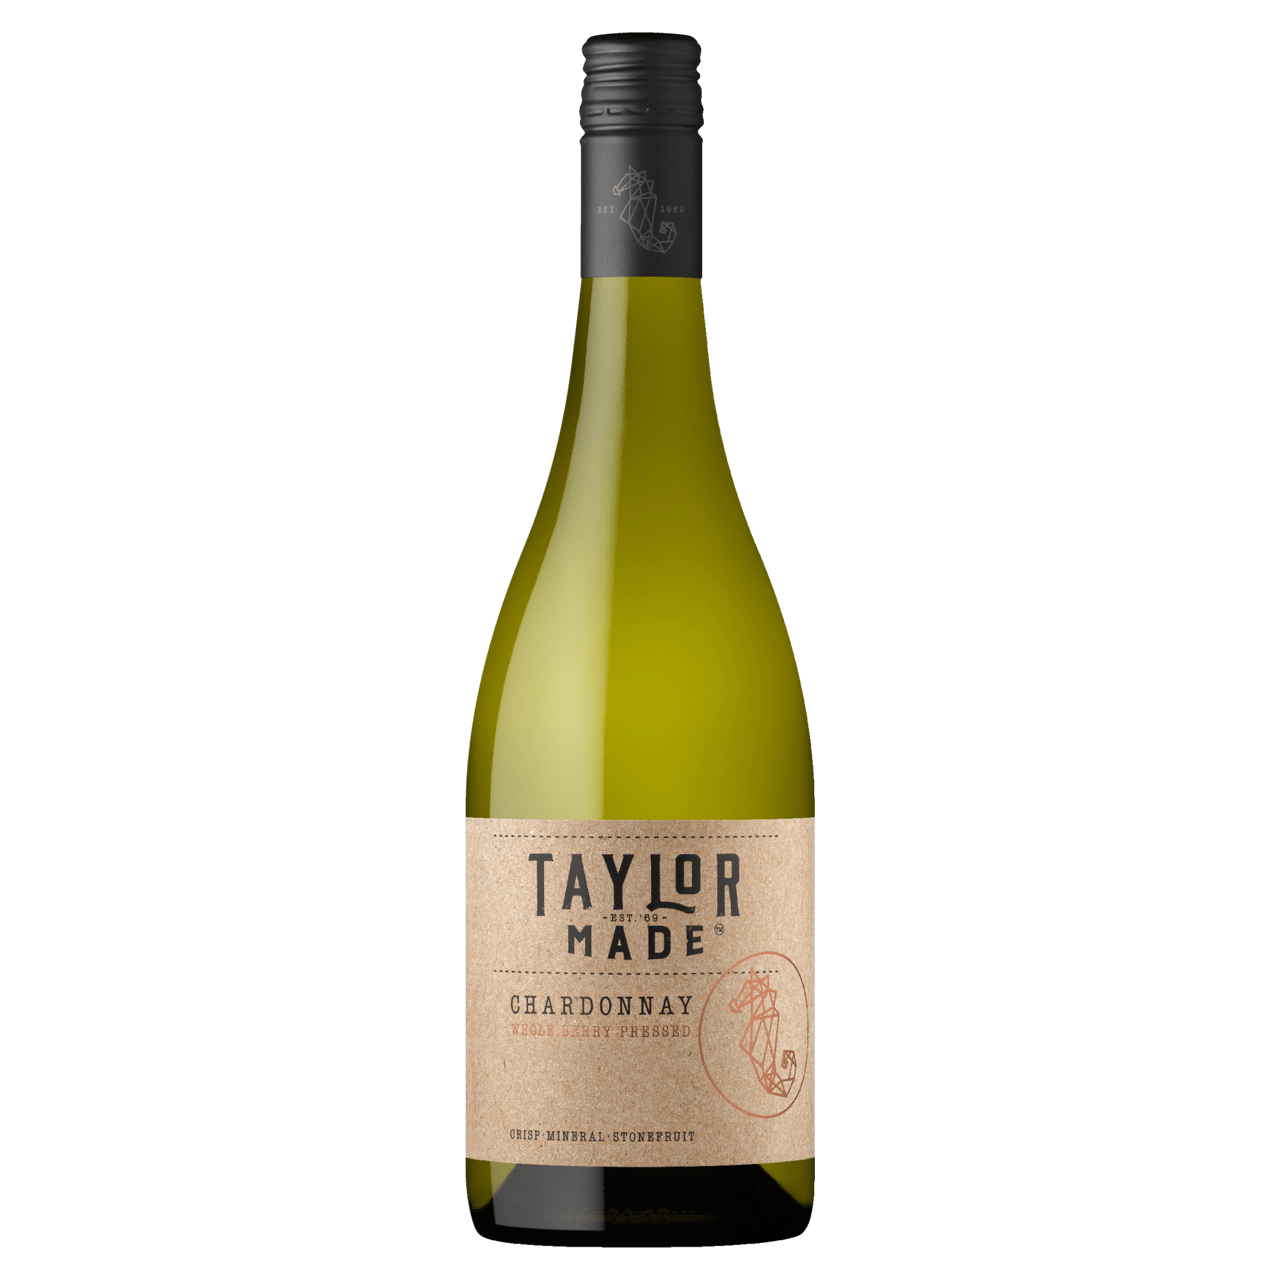 Taylors Taylor Made Chardonnay